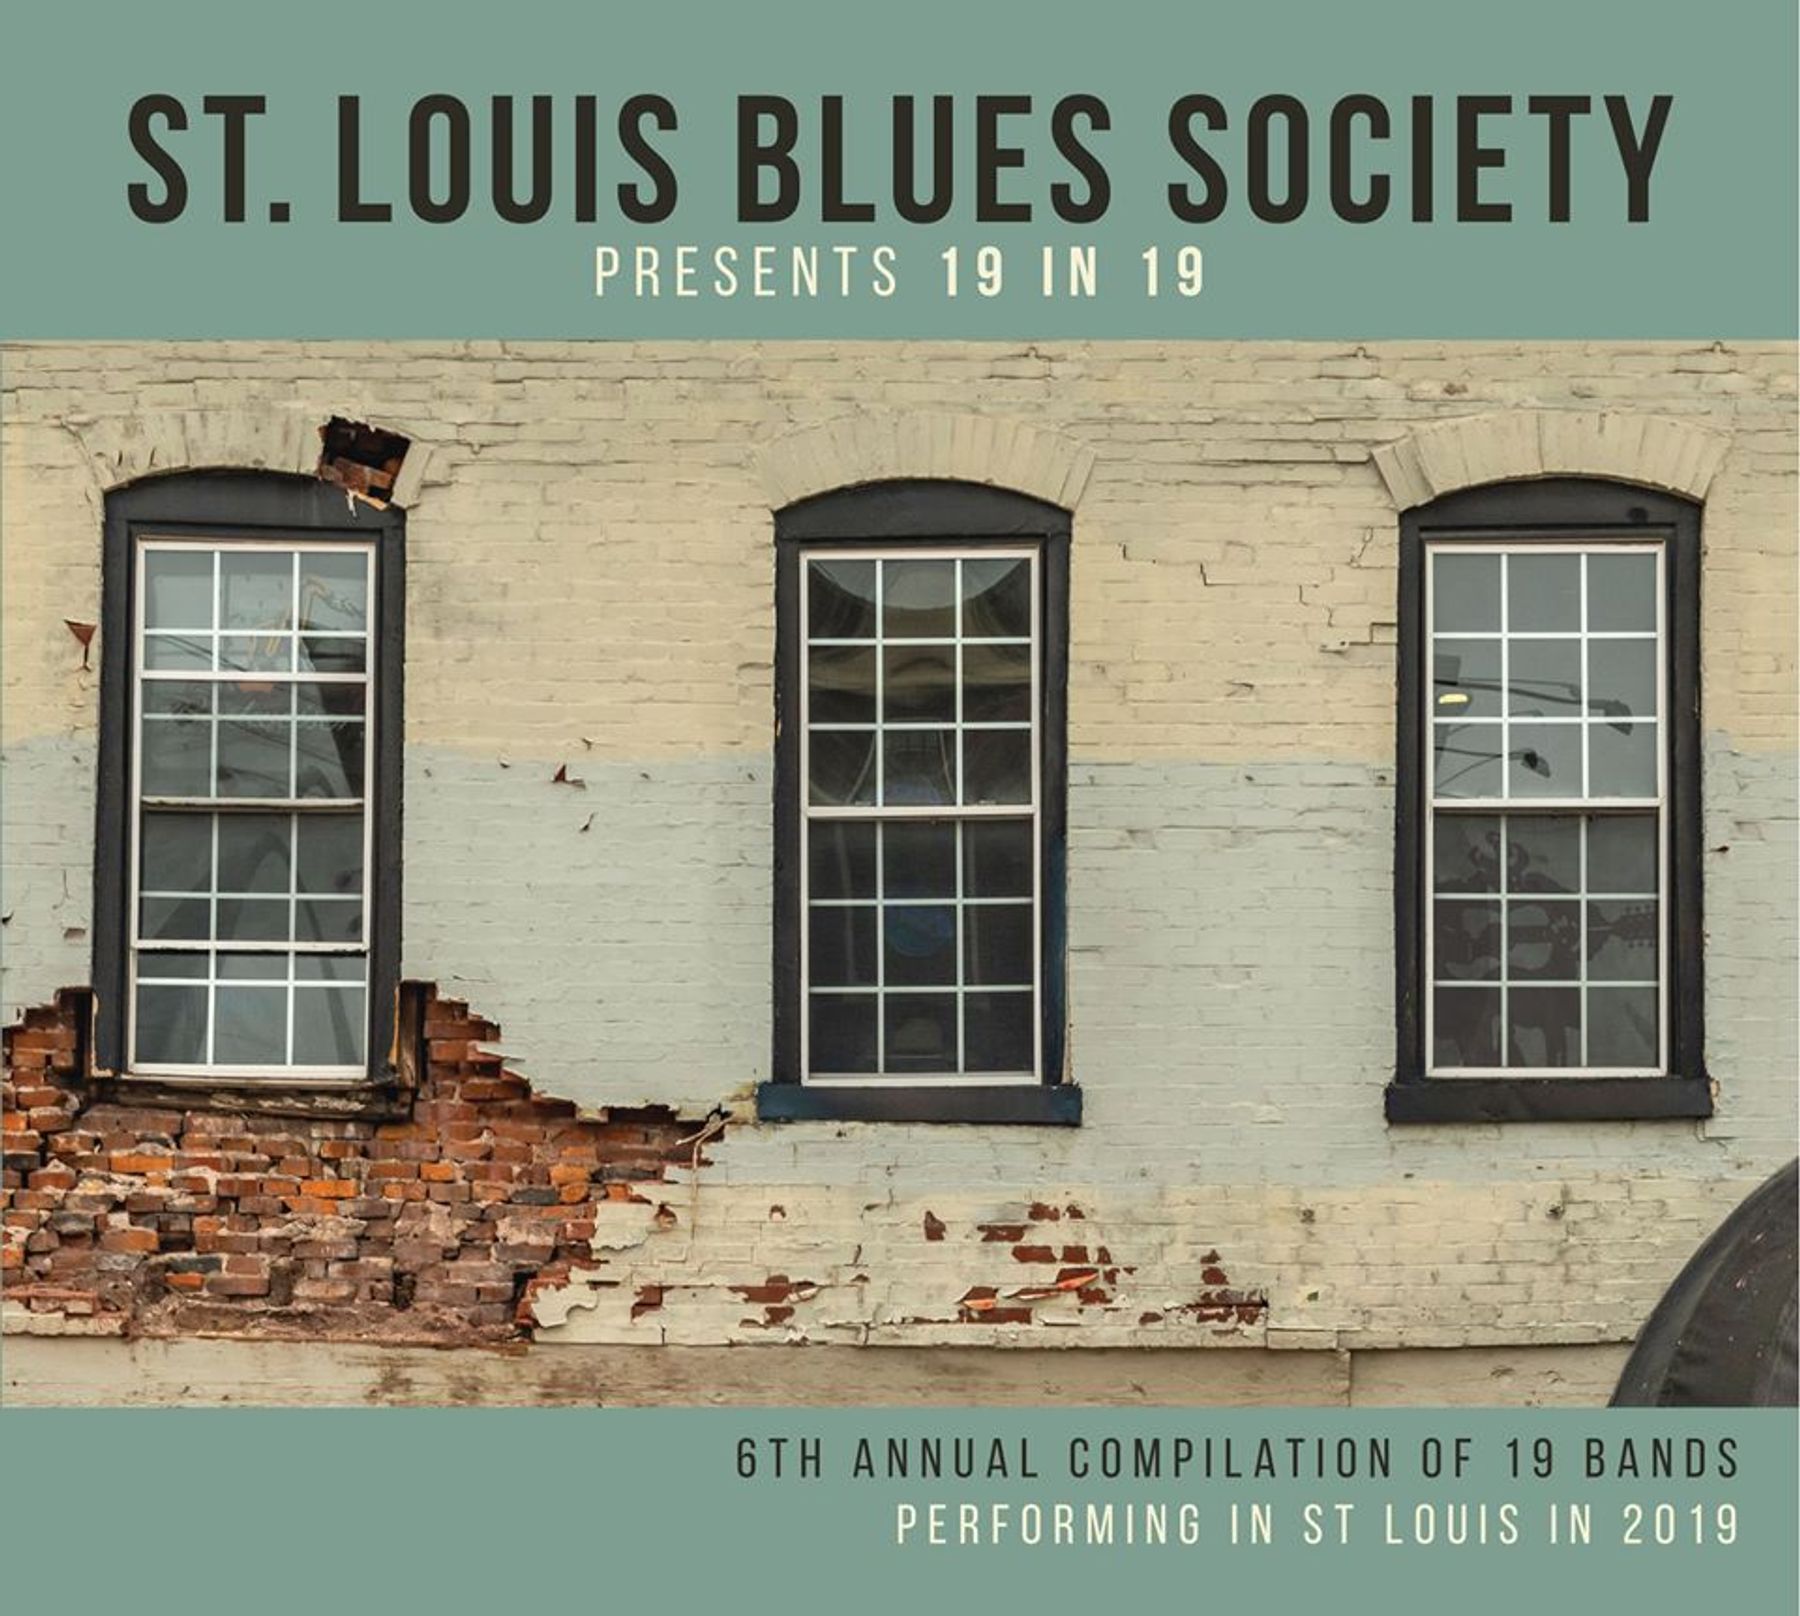 St. Louis Blues Society CONCERT CALENDAR